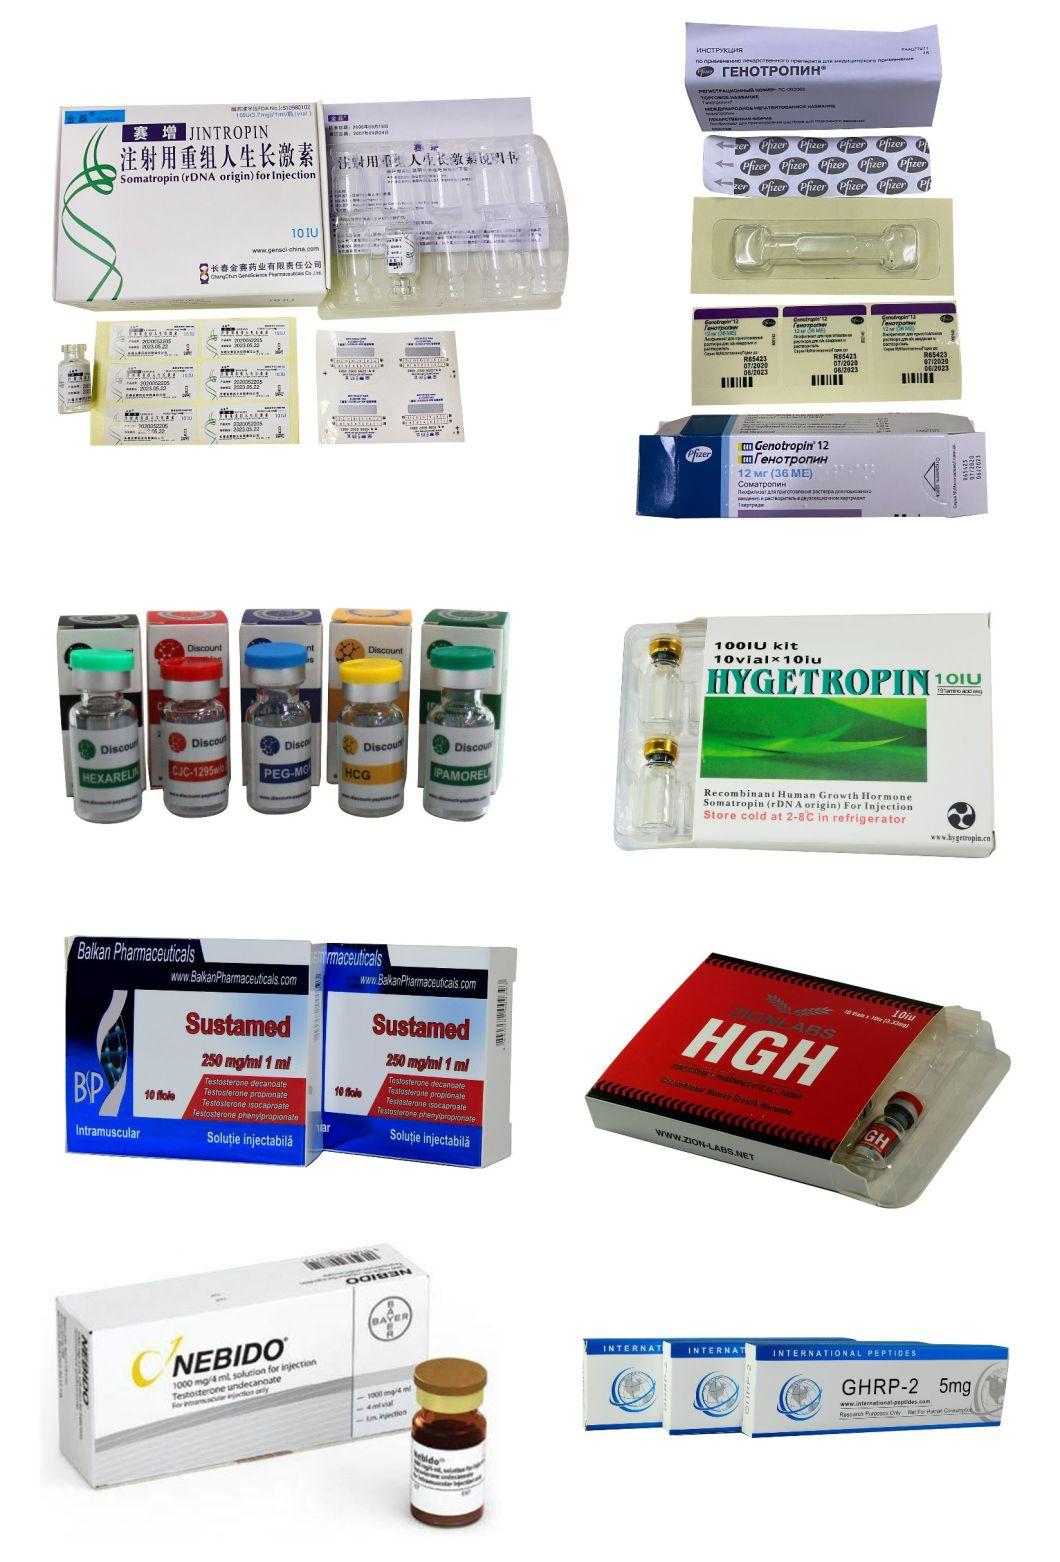 Custom High Quality HGH Paper Boxes for 10iu/Vial Somatotropin Human Growth Hormone Box